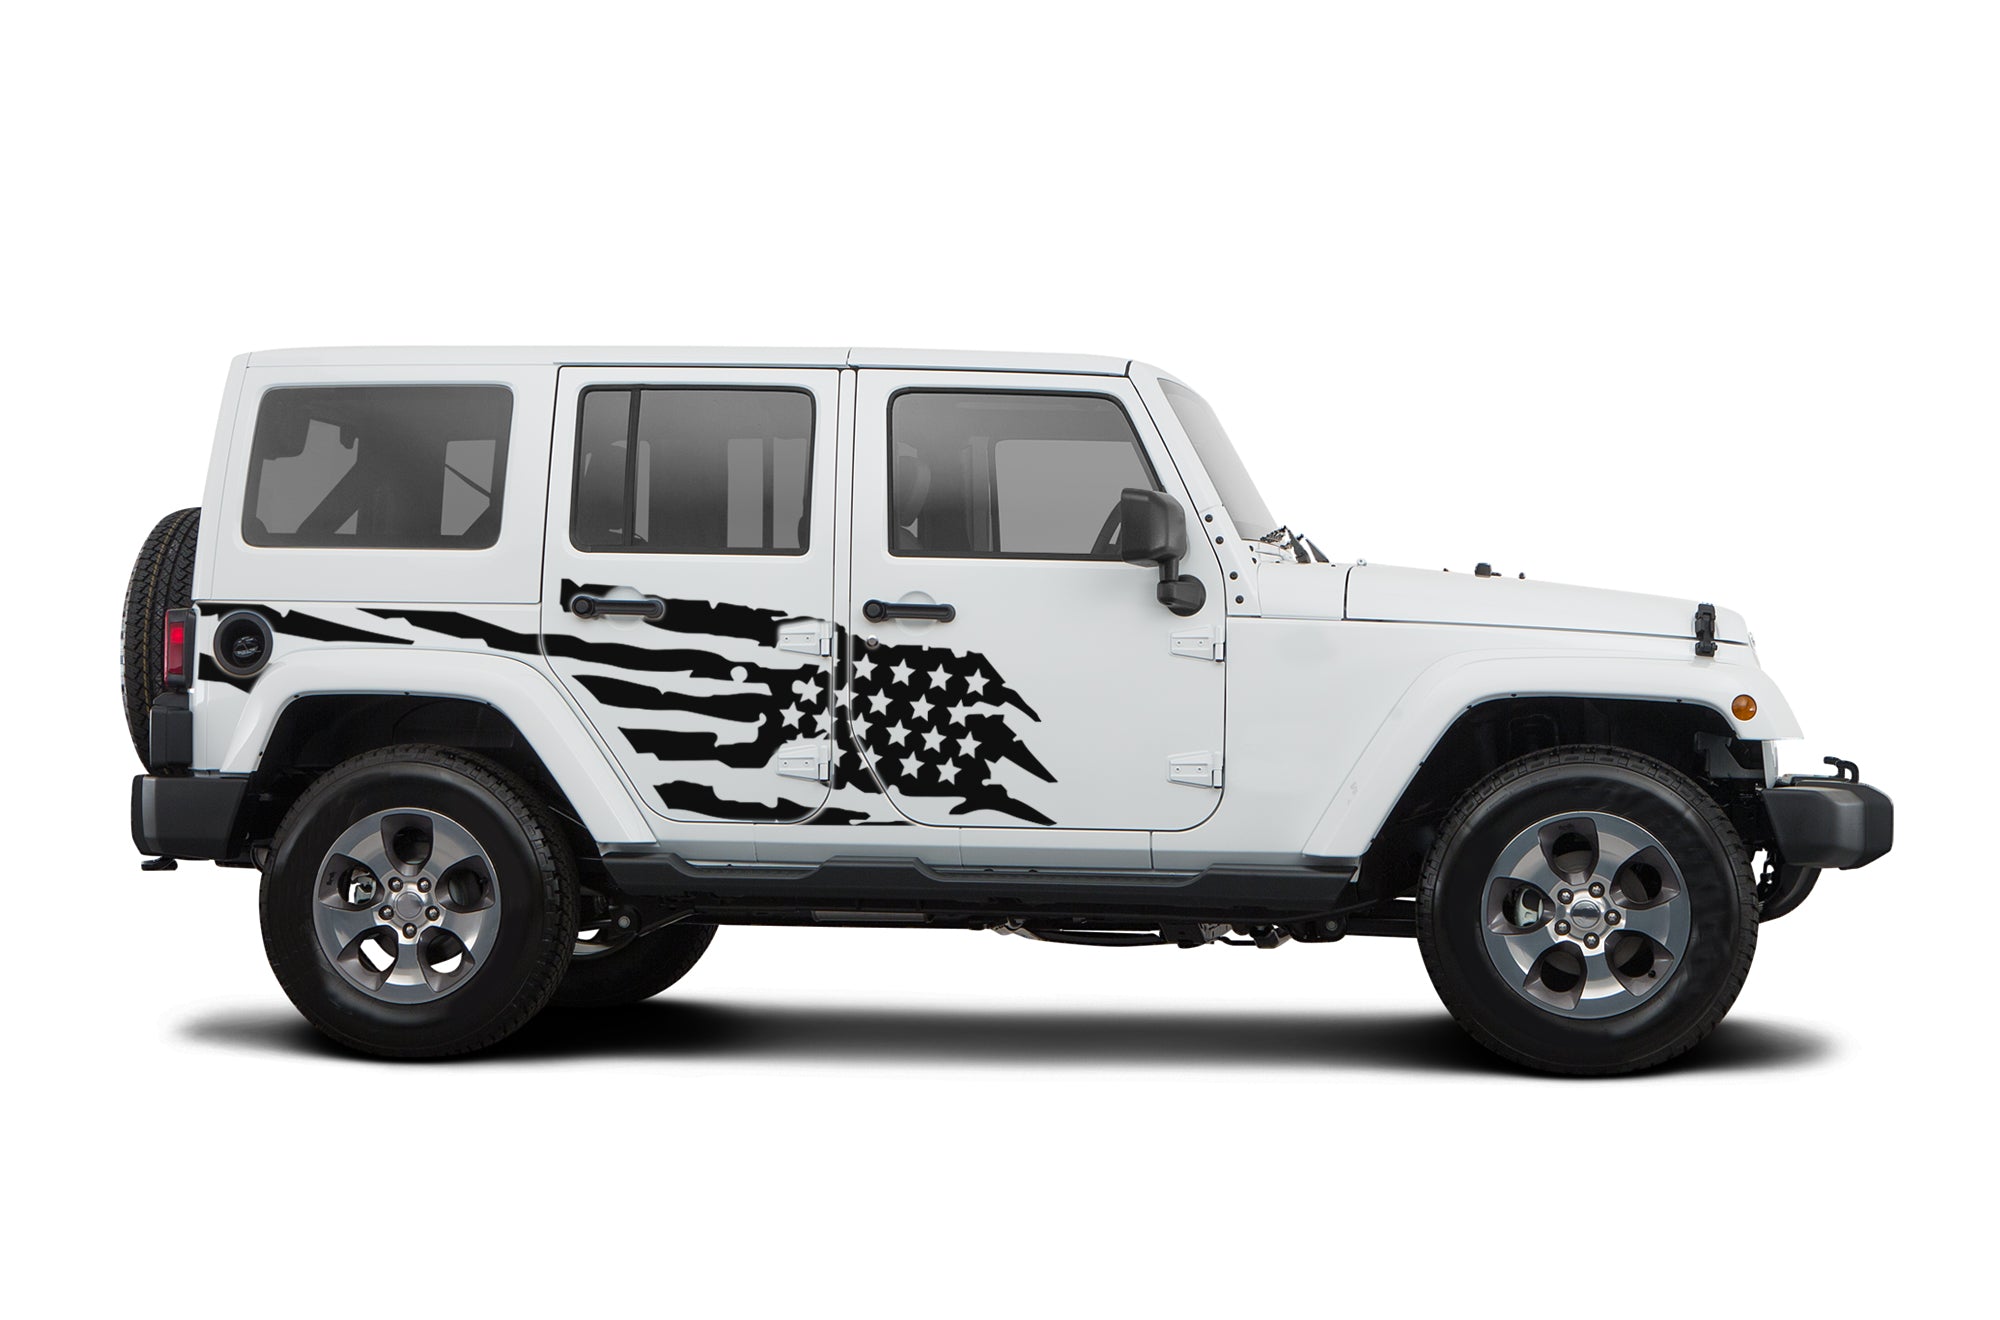 onszelf bijwoord Punt Side USA flag decals graphics compatible with Jeep Wrangler JK